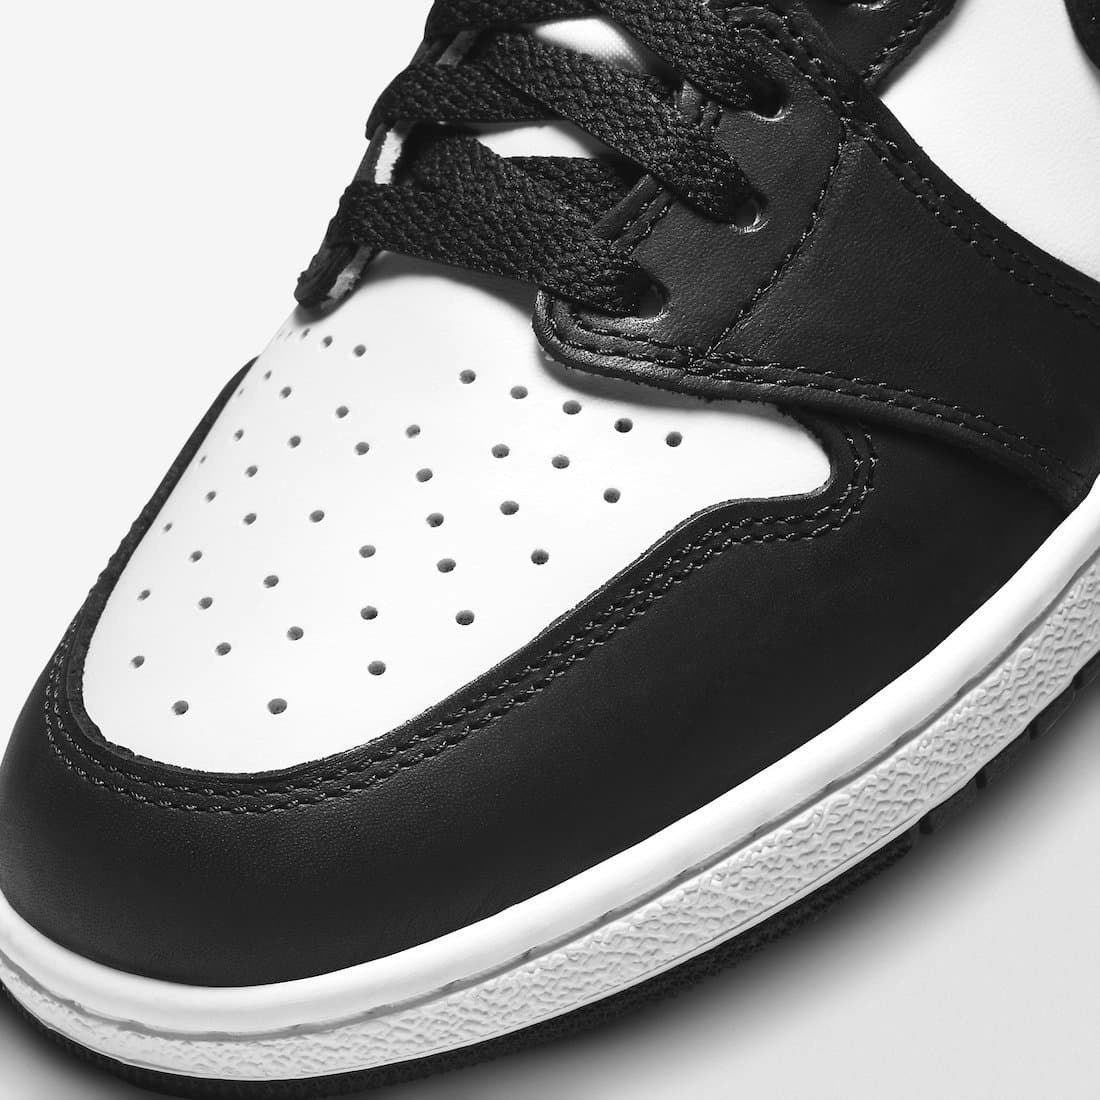 Air Jordan 1 High ’85 "Black White"